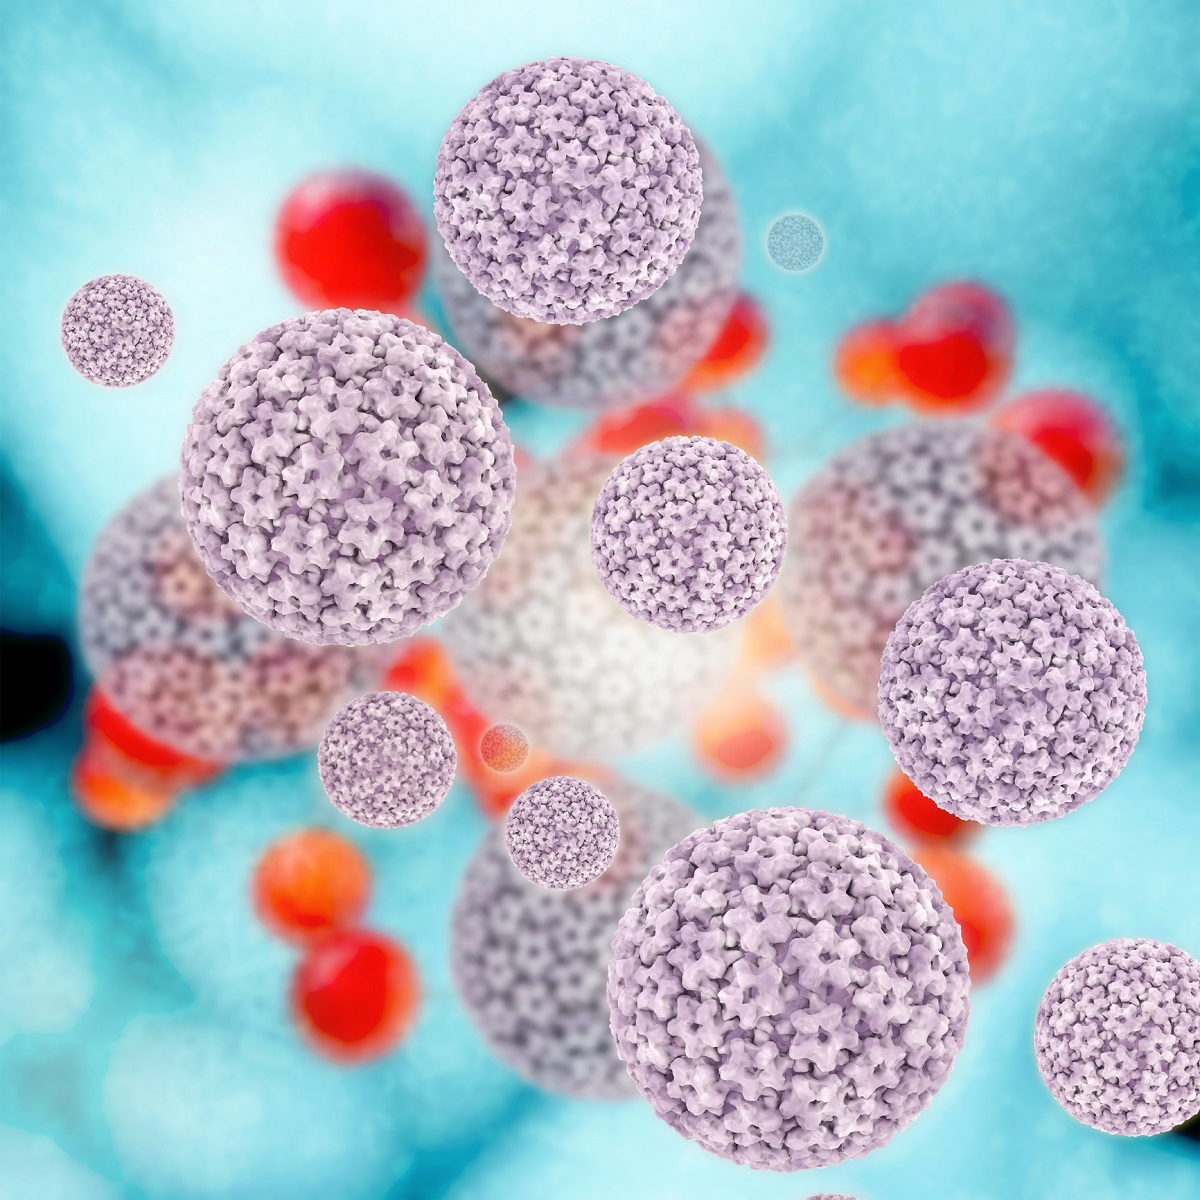 Zobrazení viru HPV. Zdroj.